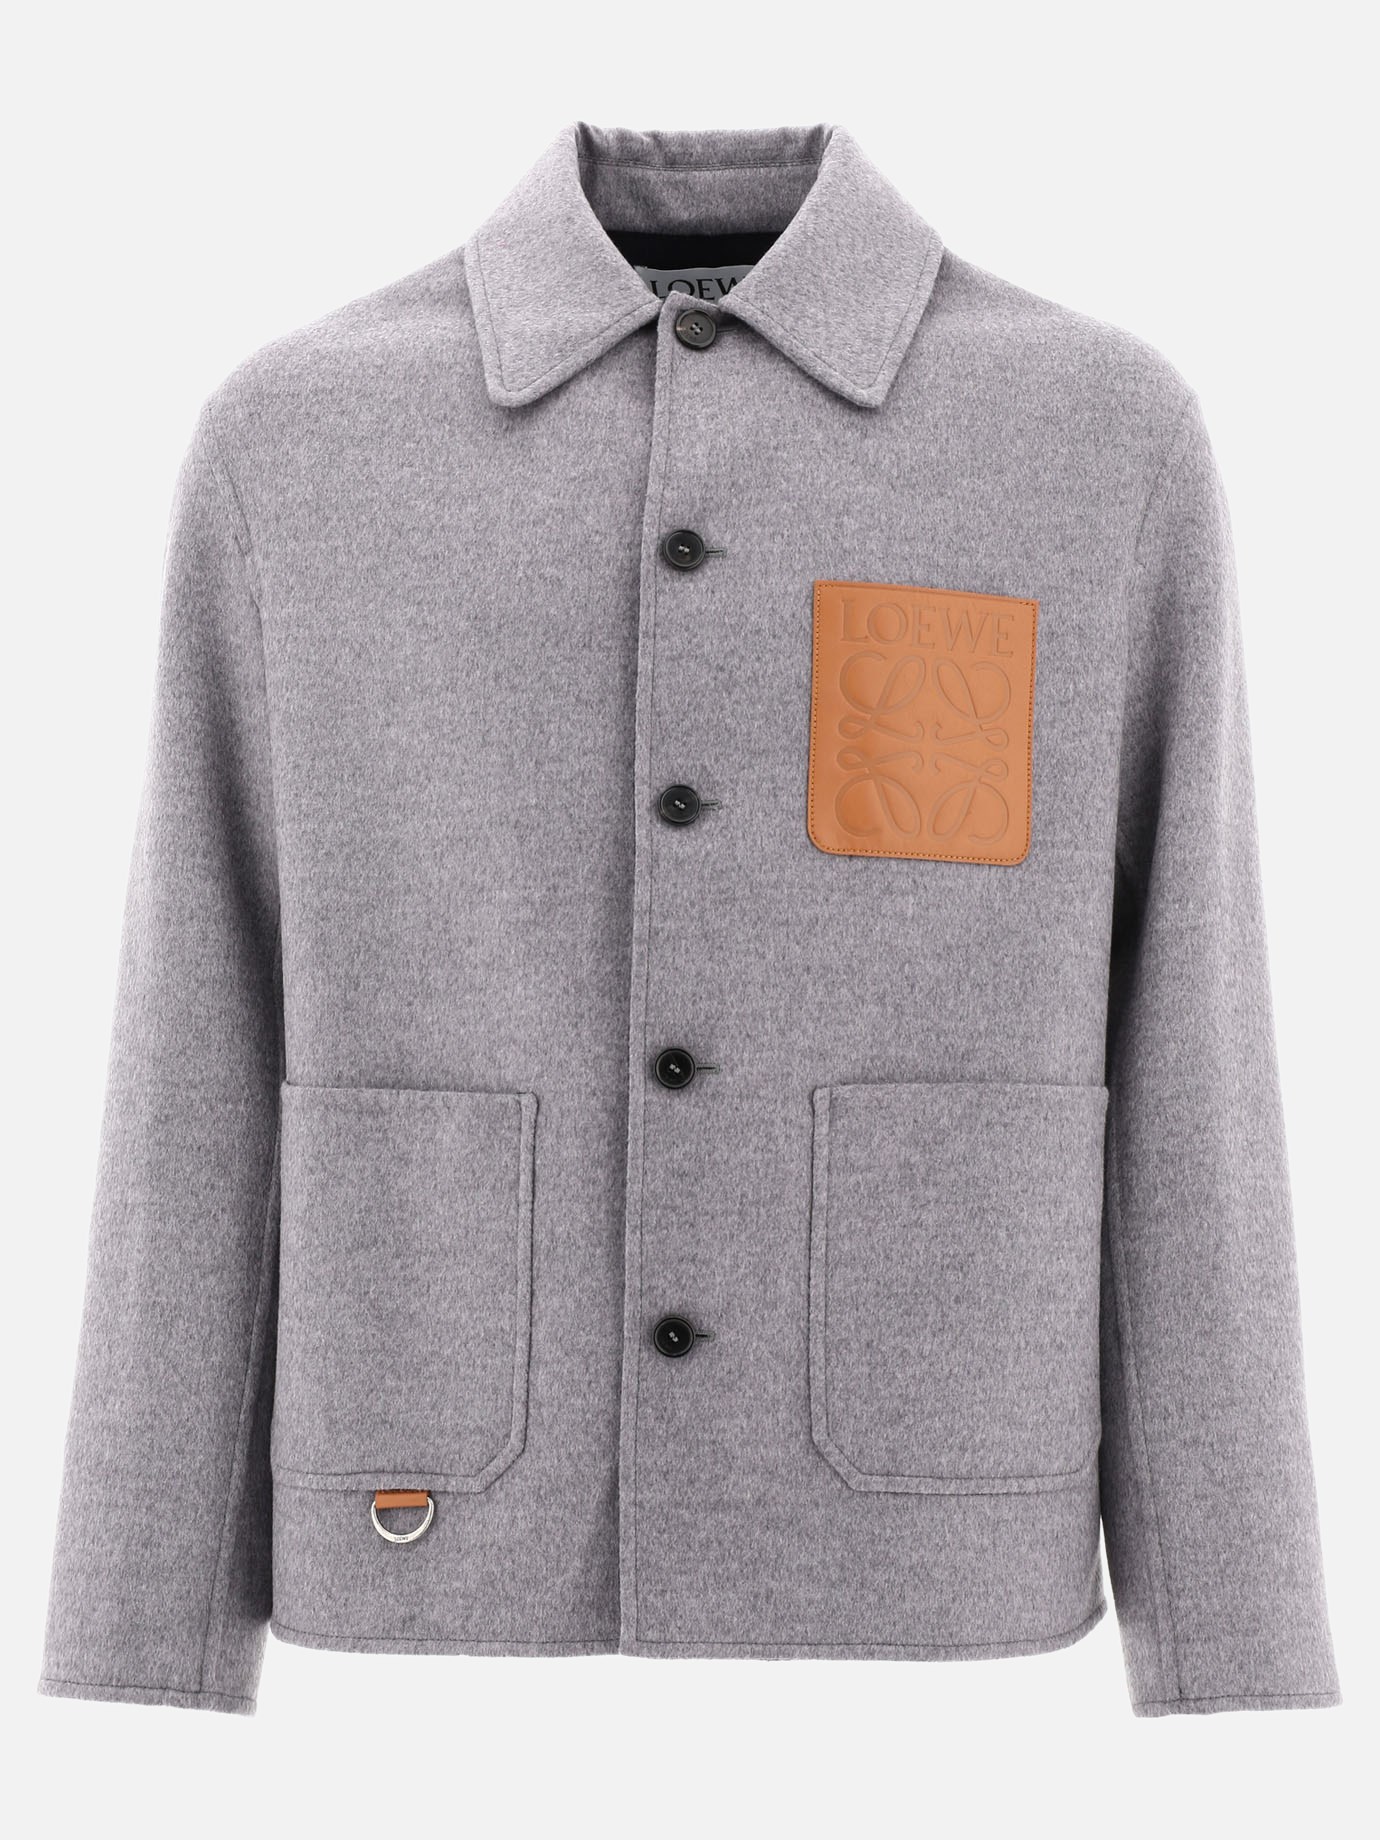  Workwear  jacketby Loewe - 0